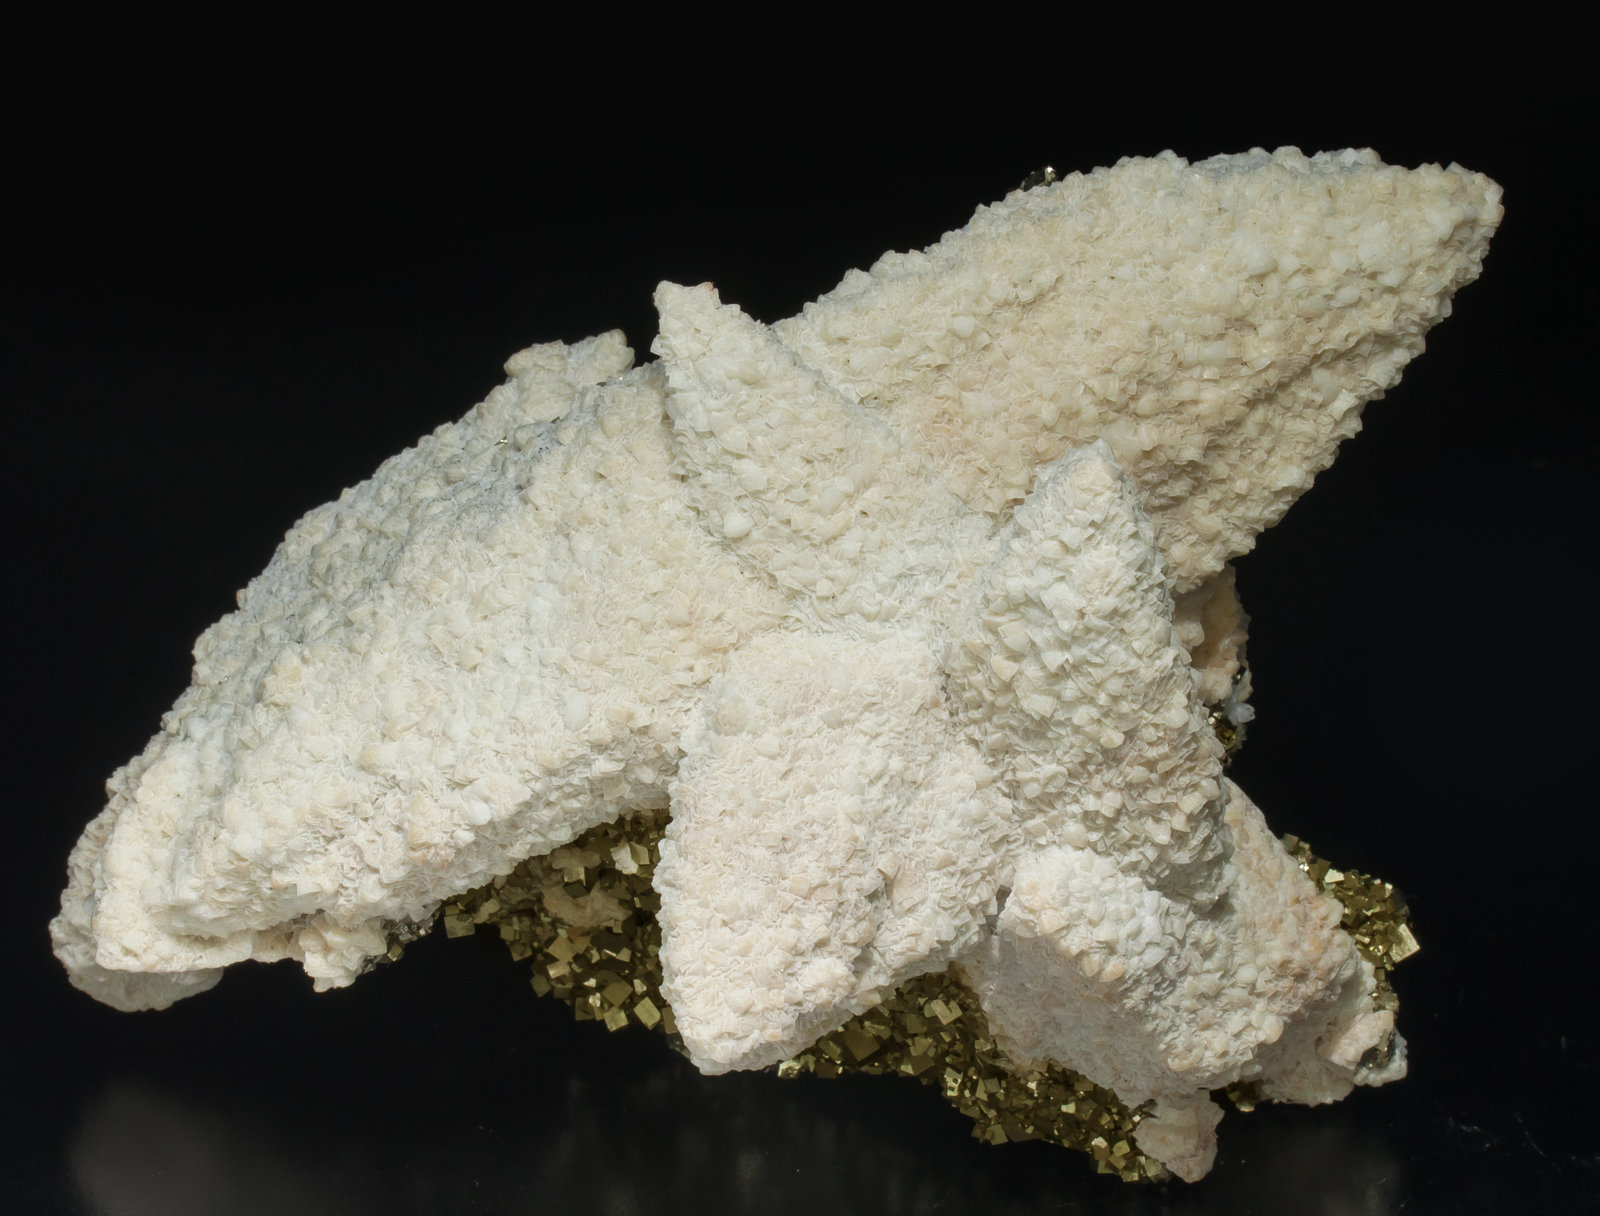 specimens/s_imagesAE3/Dolomite-SB37AE3s.jpg